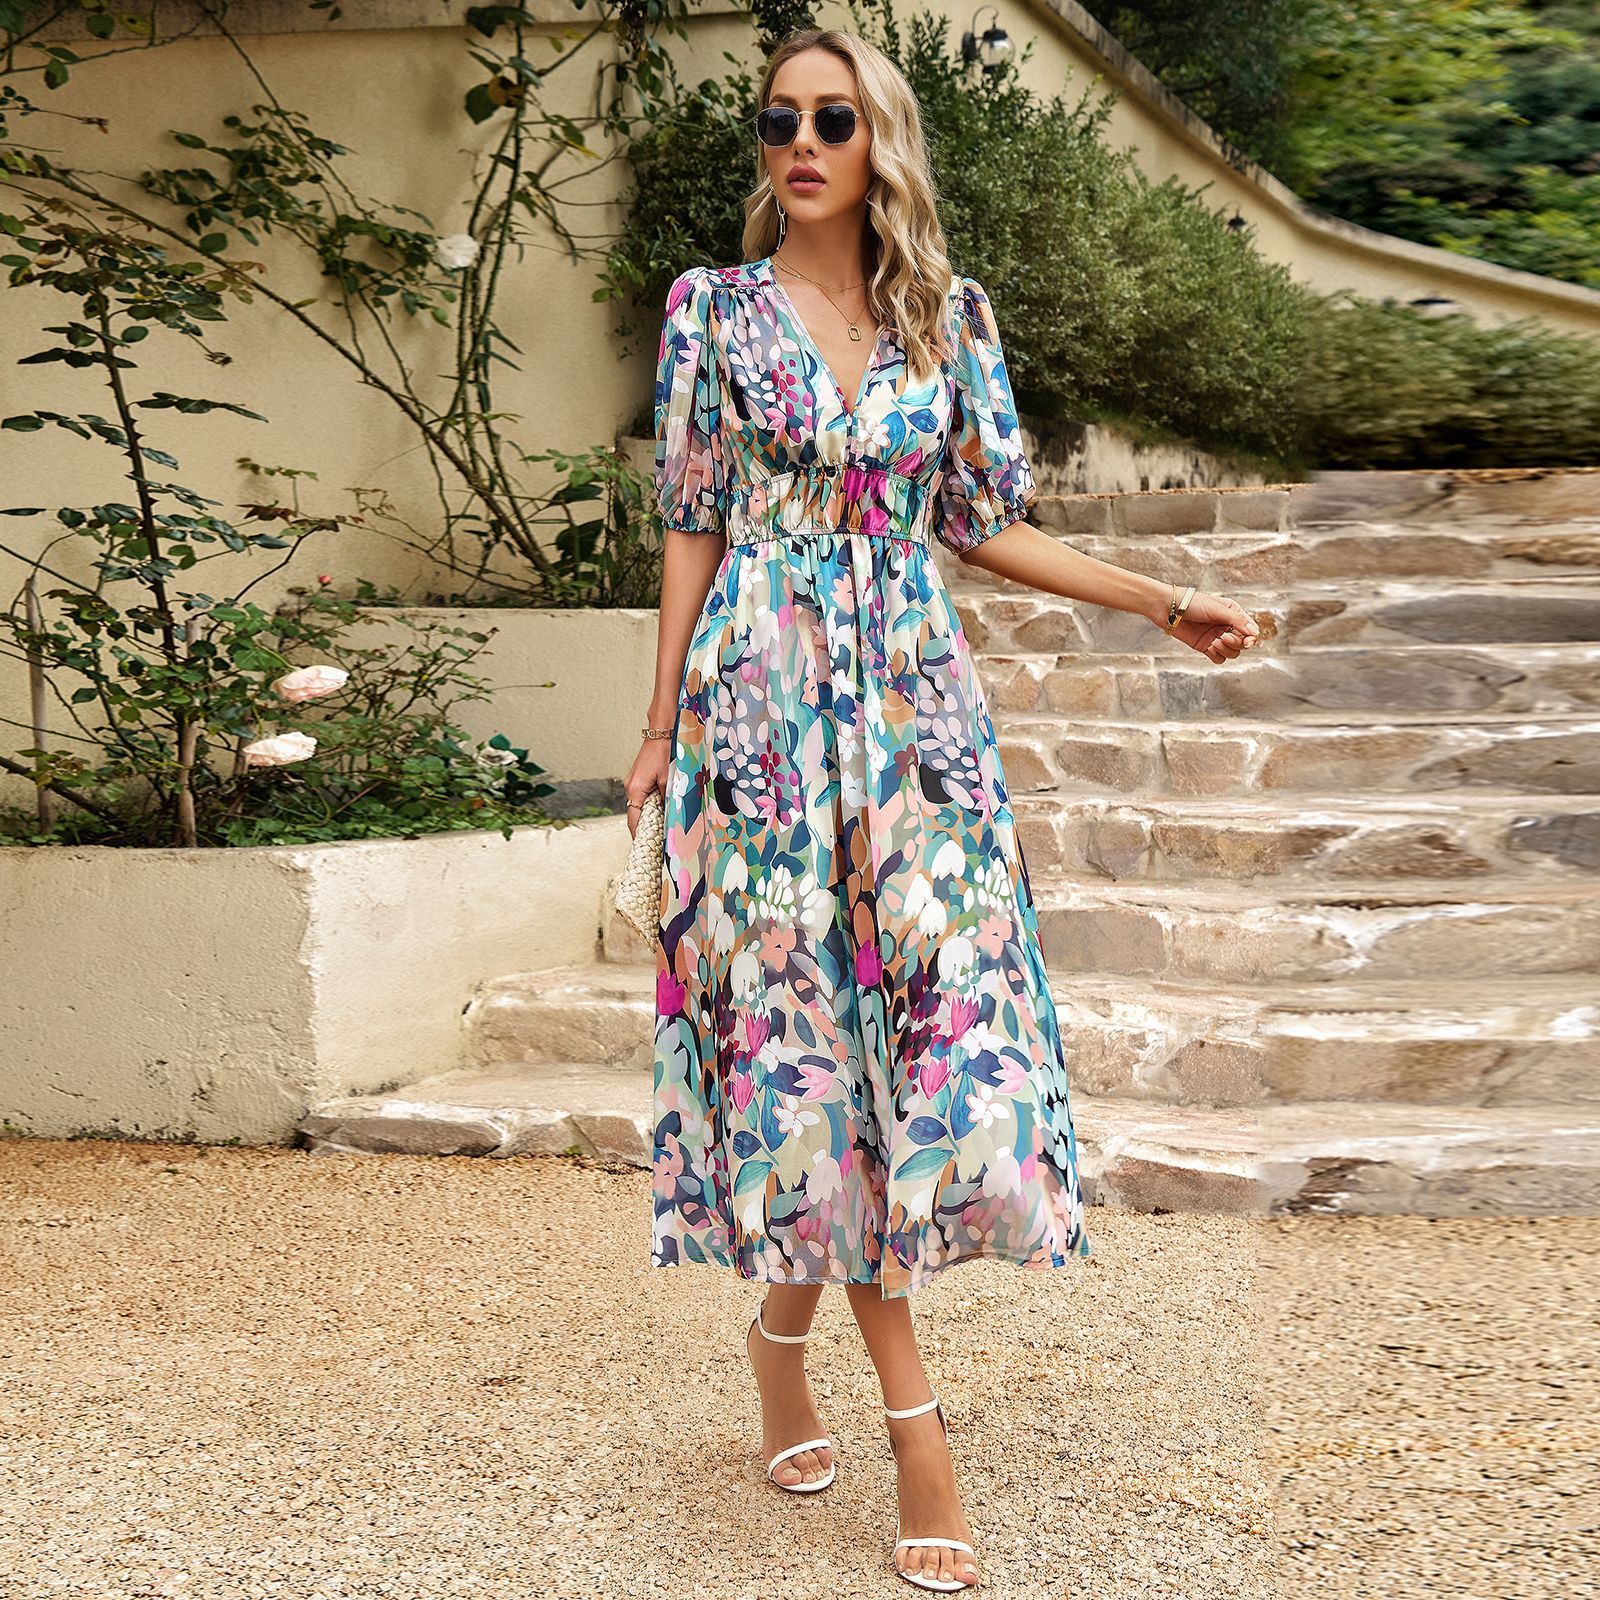 New V-neck Printed Short-sleeved Long Dress Summer Fashion Slim Seaside Vacation Beach Dresses For Women Clothing